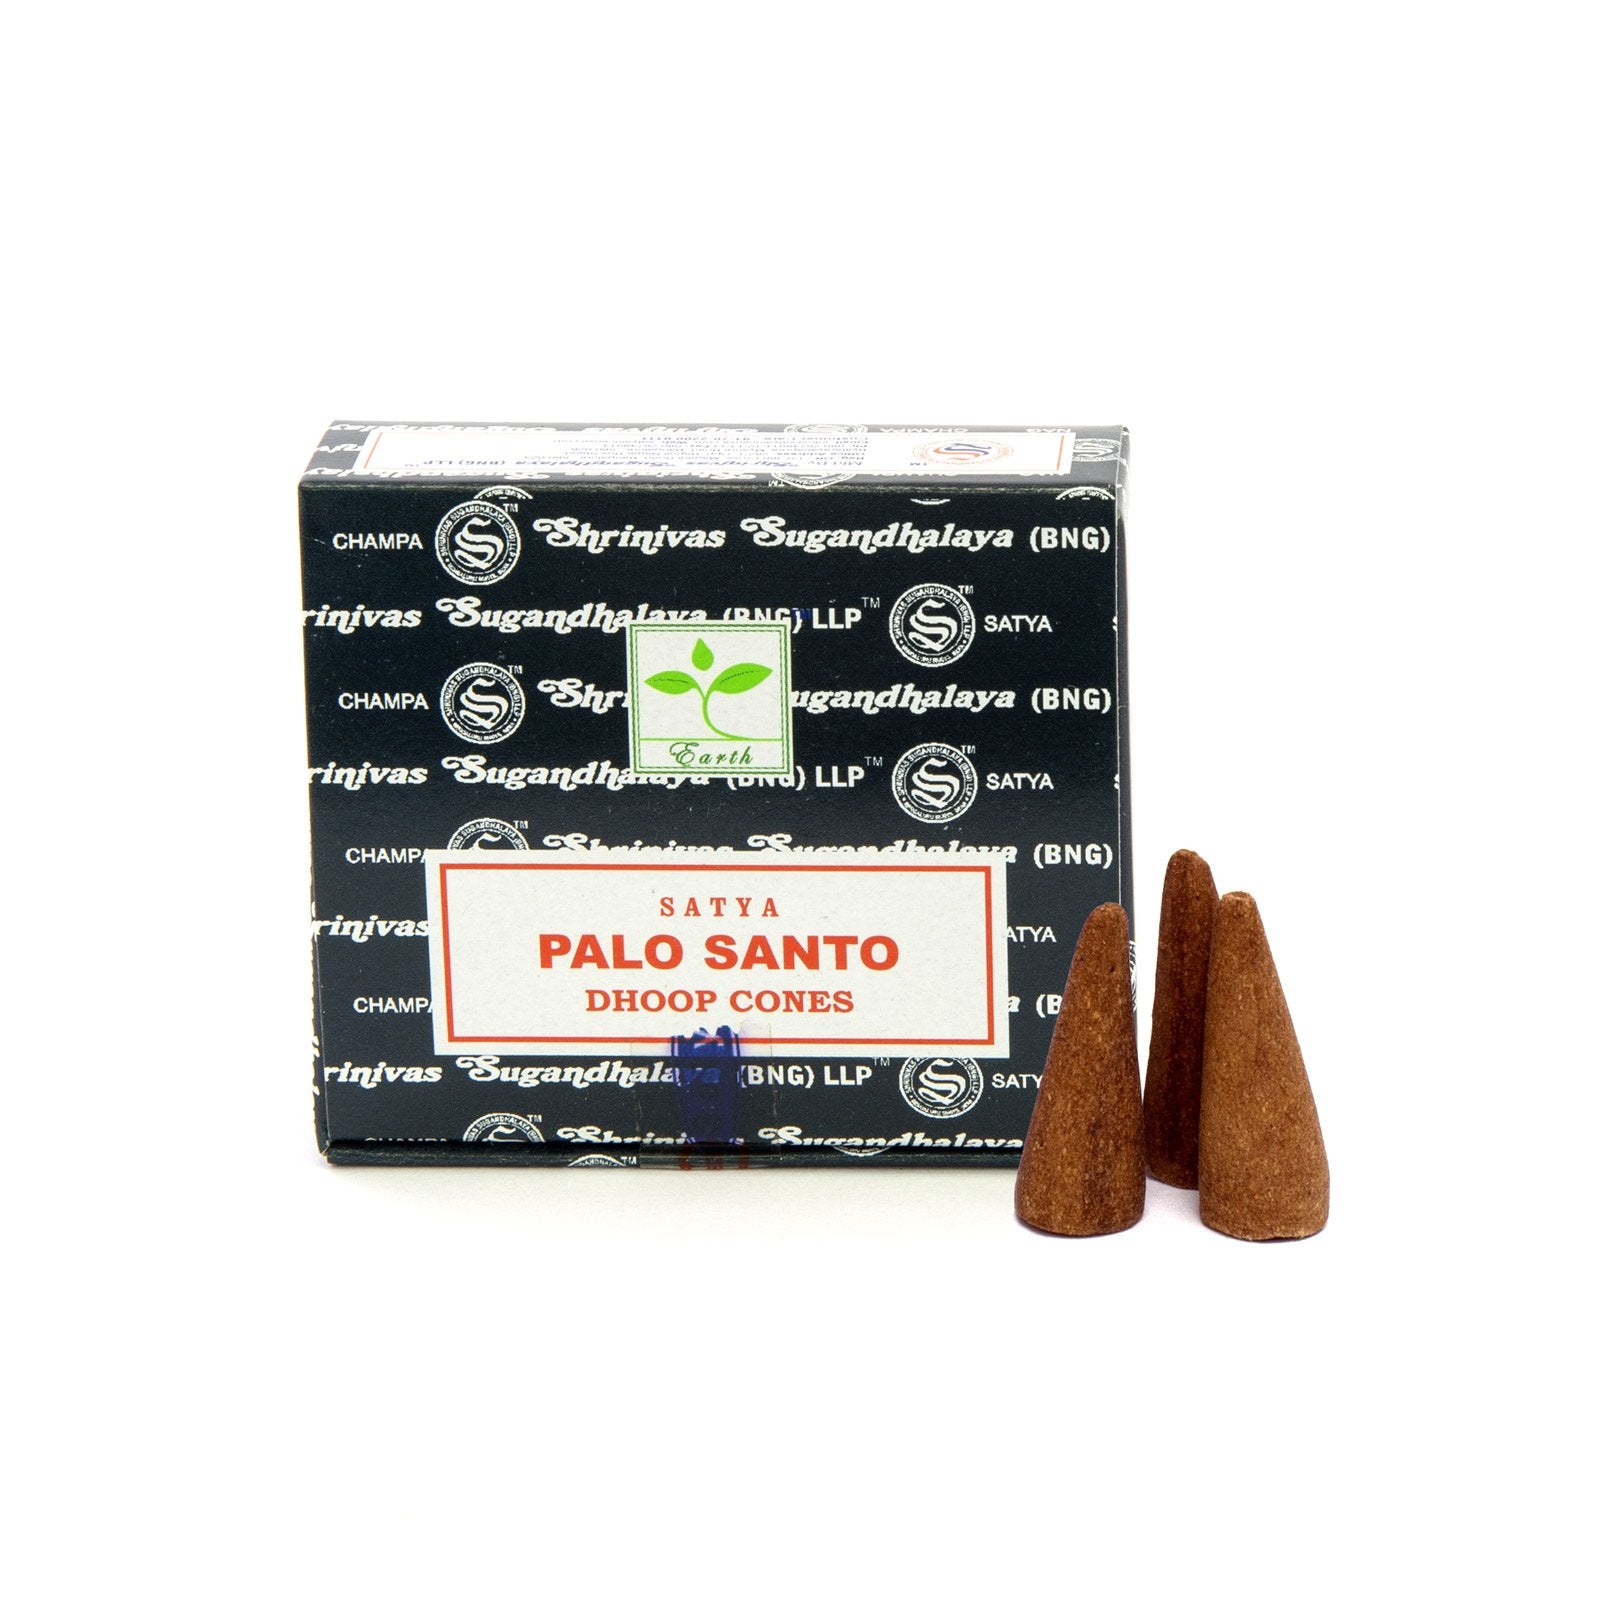 Palo Santo Incense Cones - The Spirit of Life